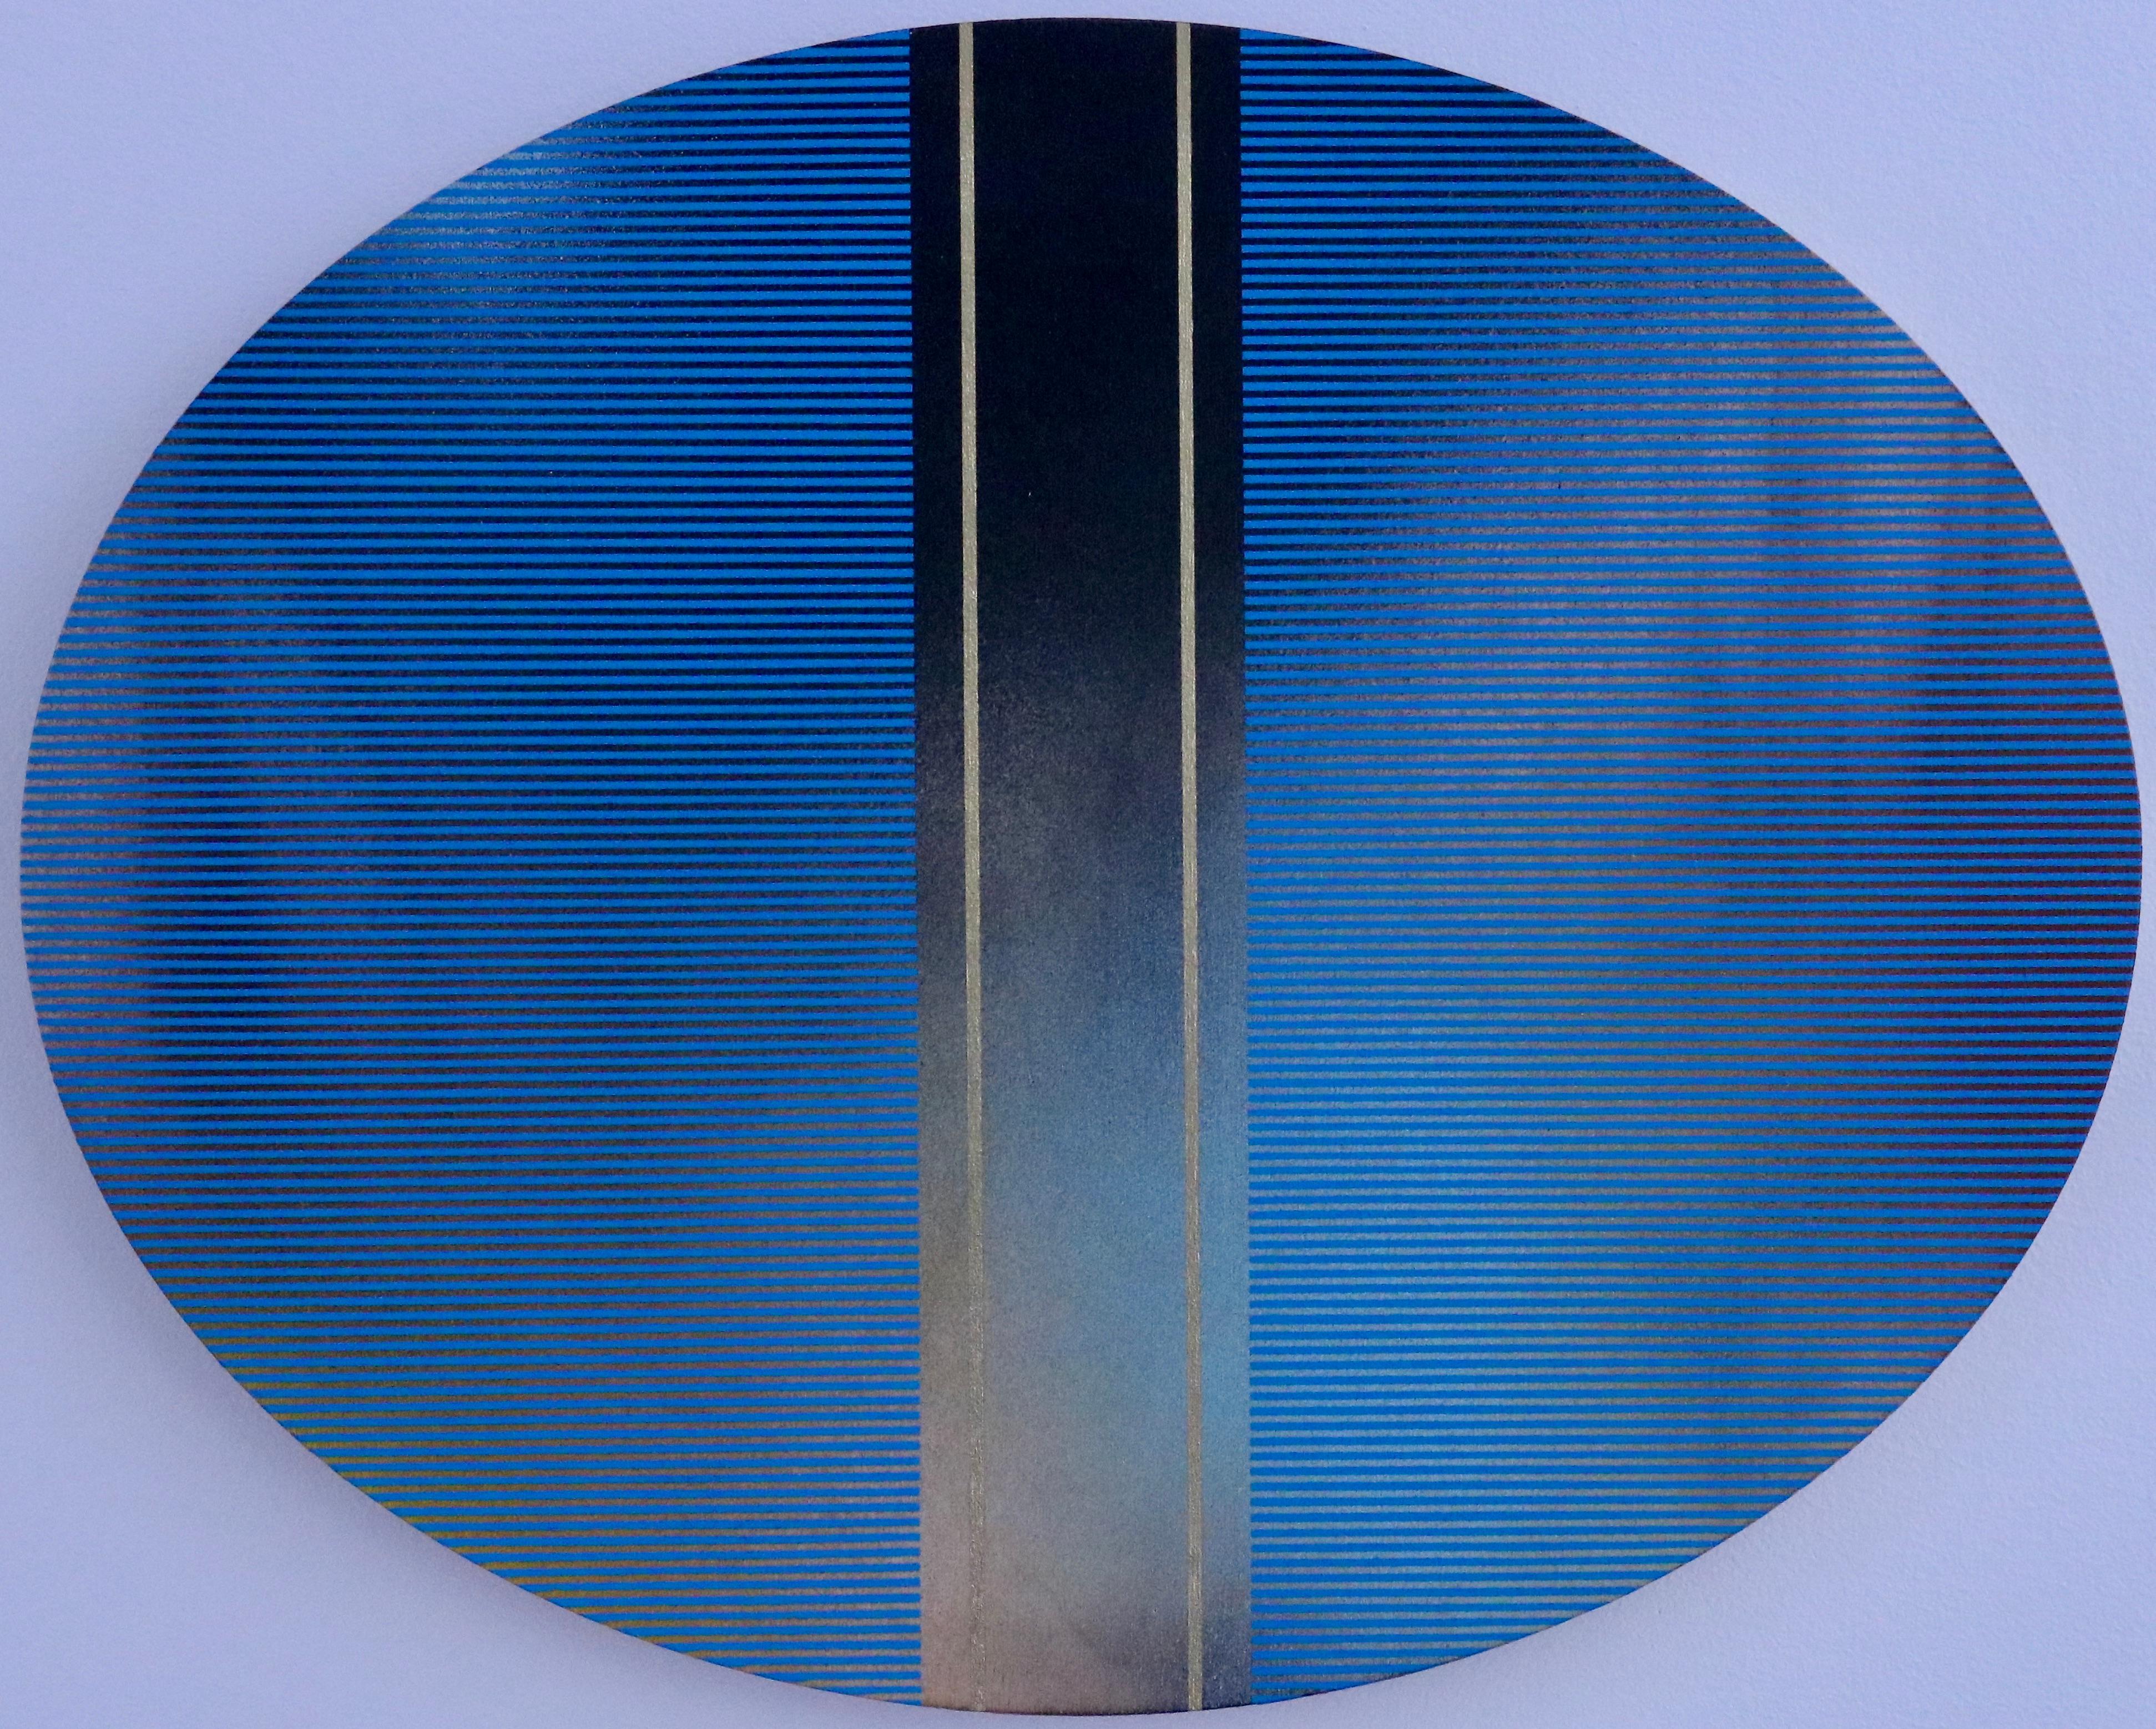 Mangata 49 Oval (classic blue grid painting abstract wood Art Deco op art) - Minimalist Mixed Media Art by Melisa Taylor Metzger